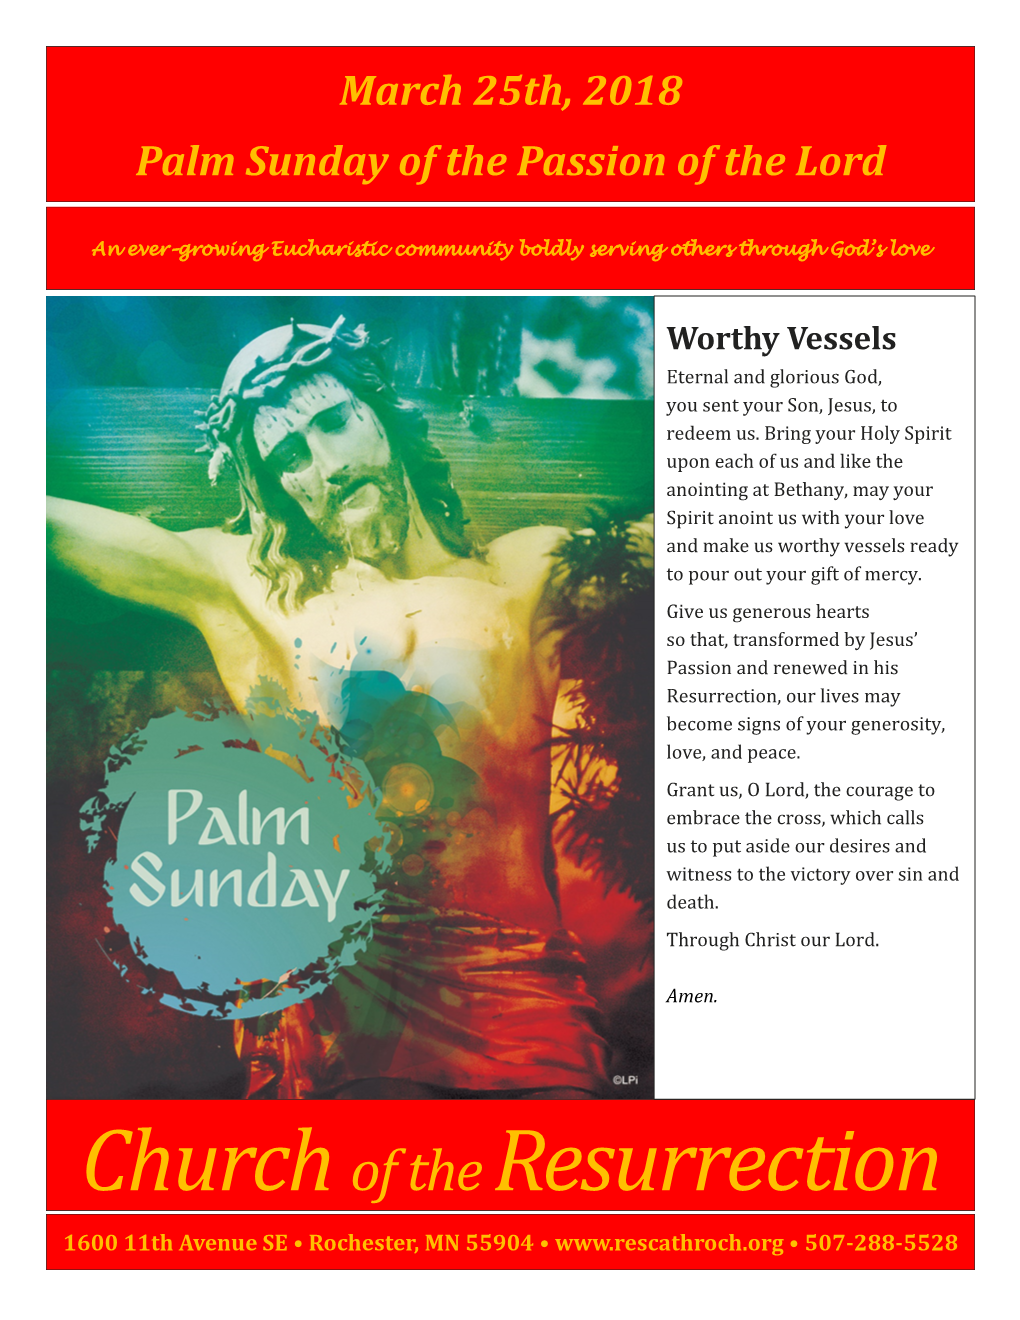 March 25, 2018, Palm Sunday